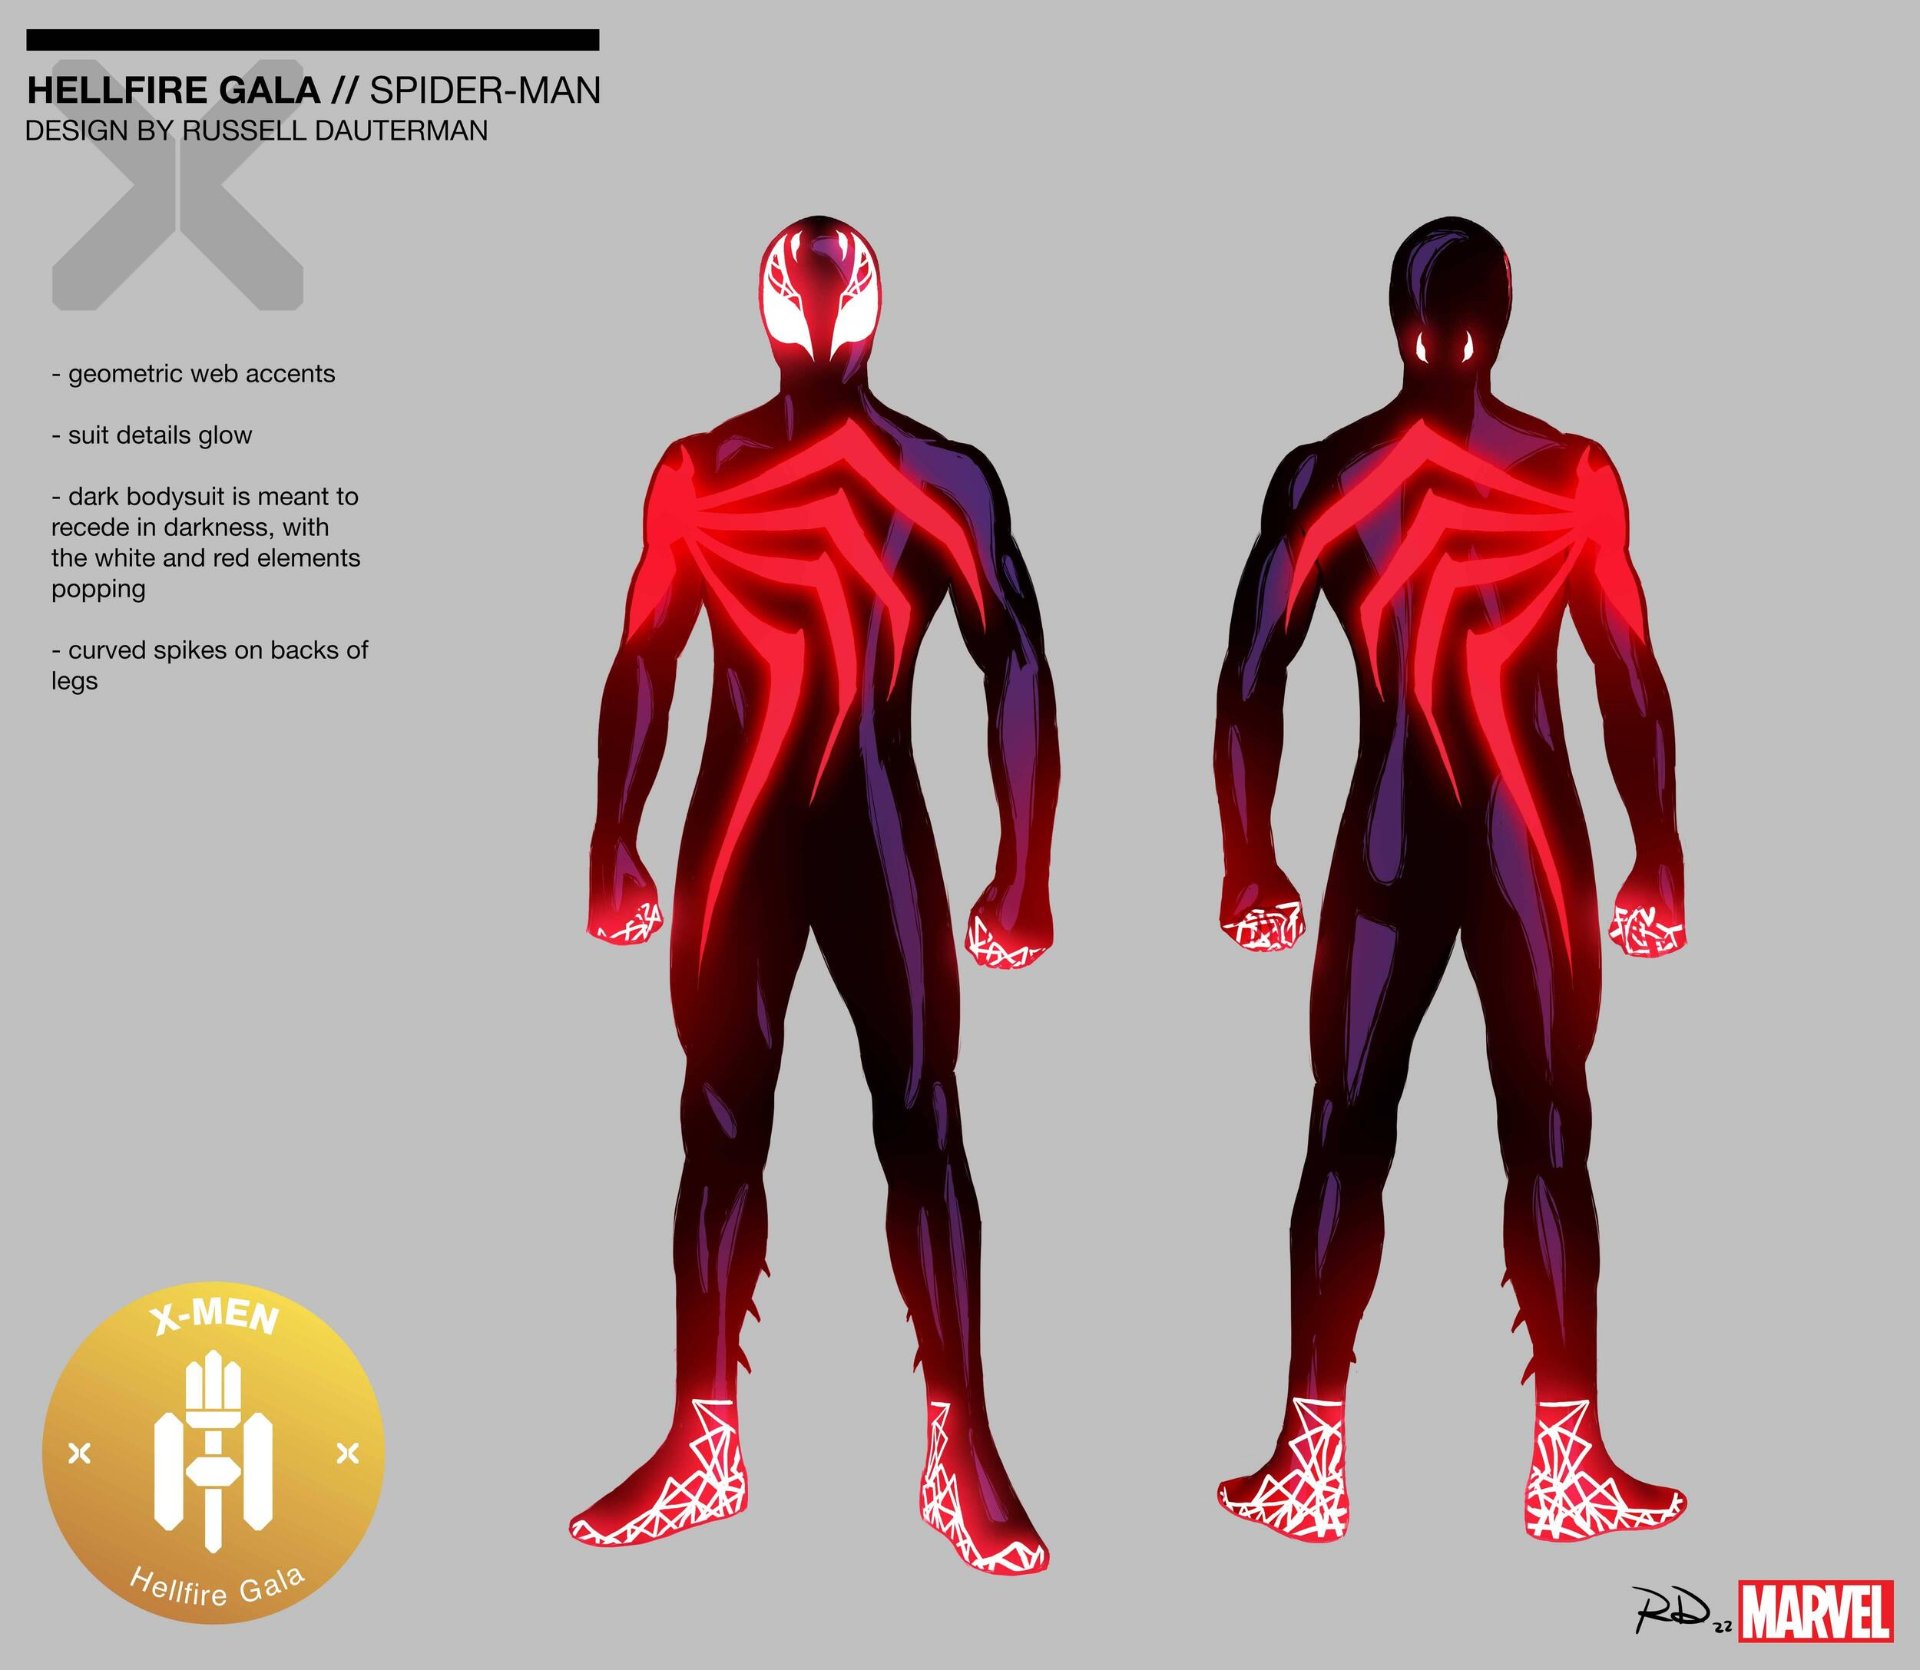 Hellfire Gala 2022 designs